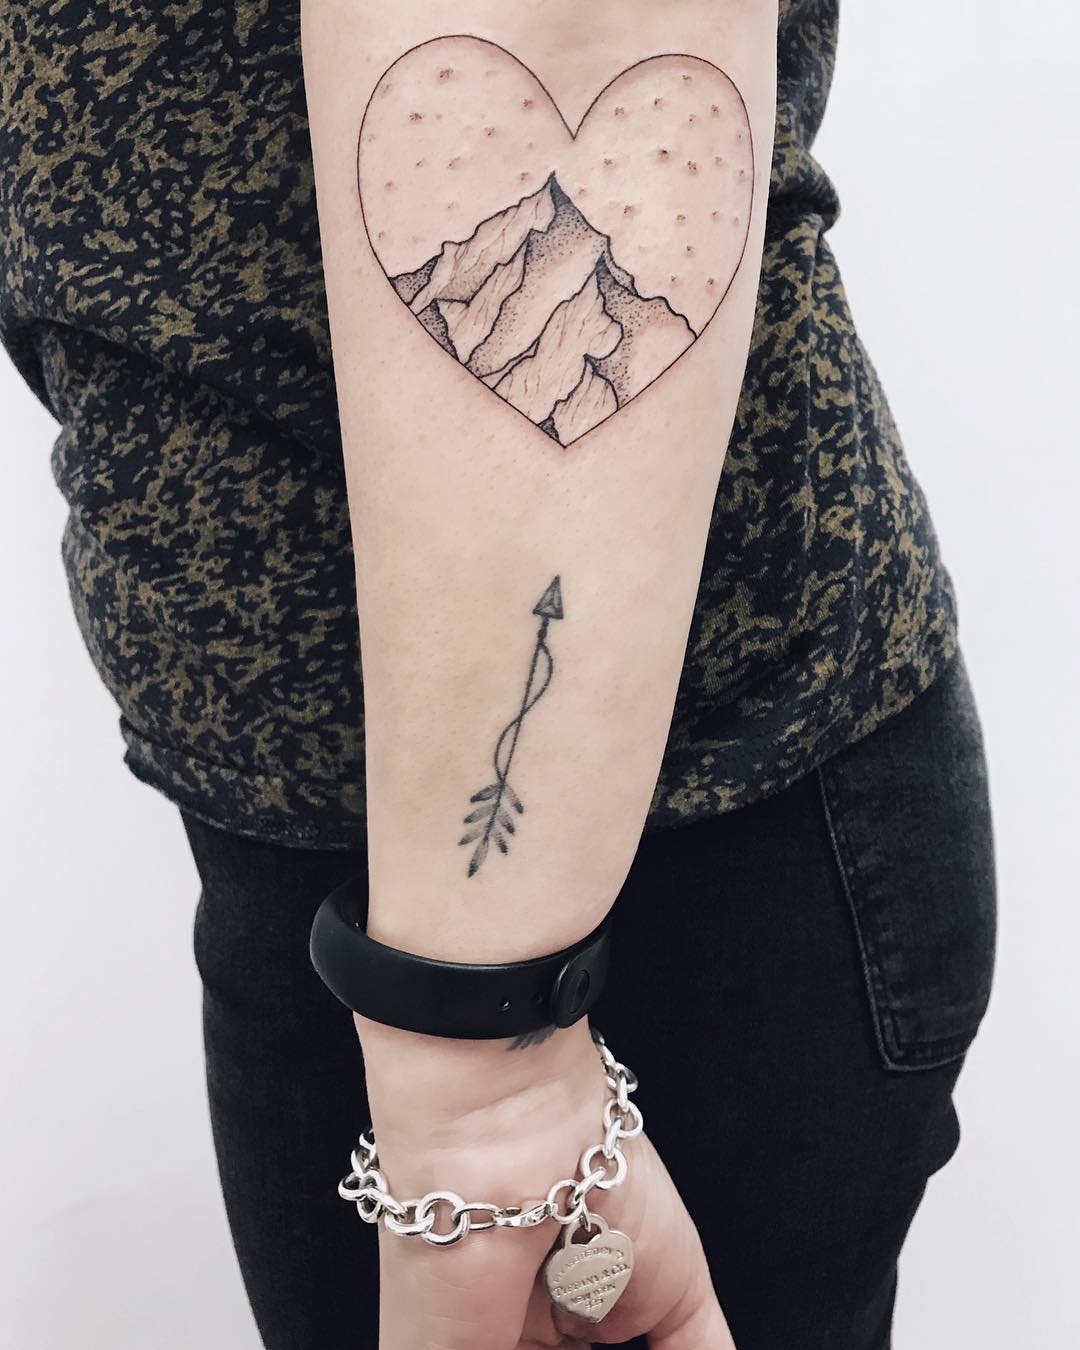 tatuaggio blackgrey freccia piccola by @karina scawoottt